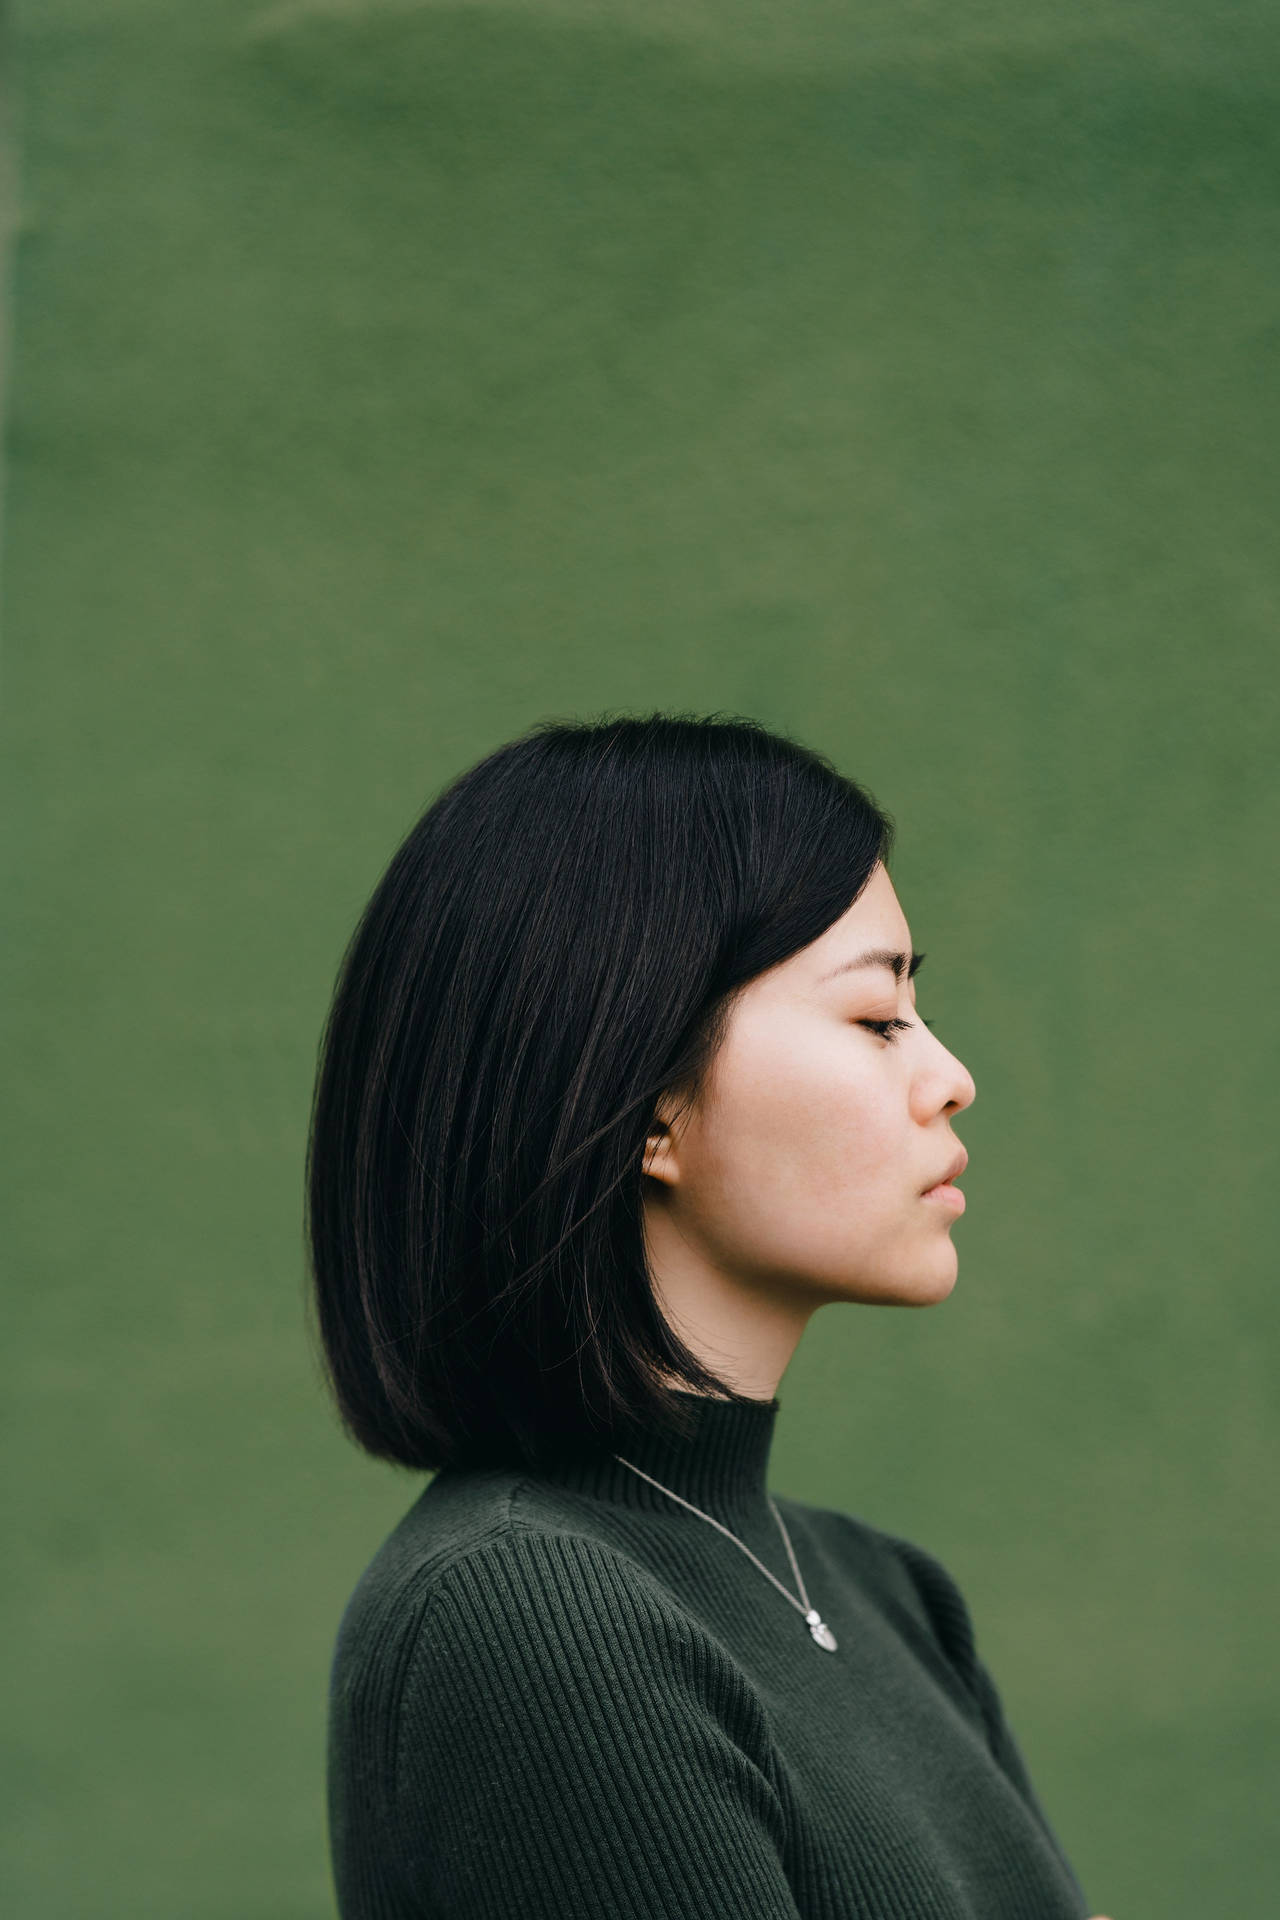 Asian Woman In Dark Green Turtleneck Background